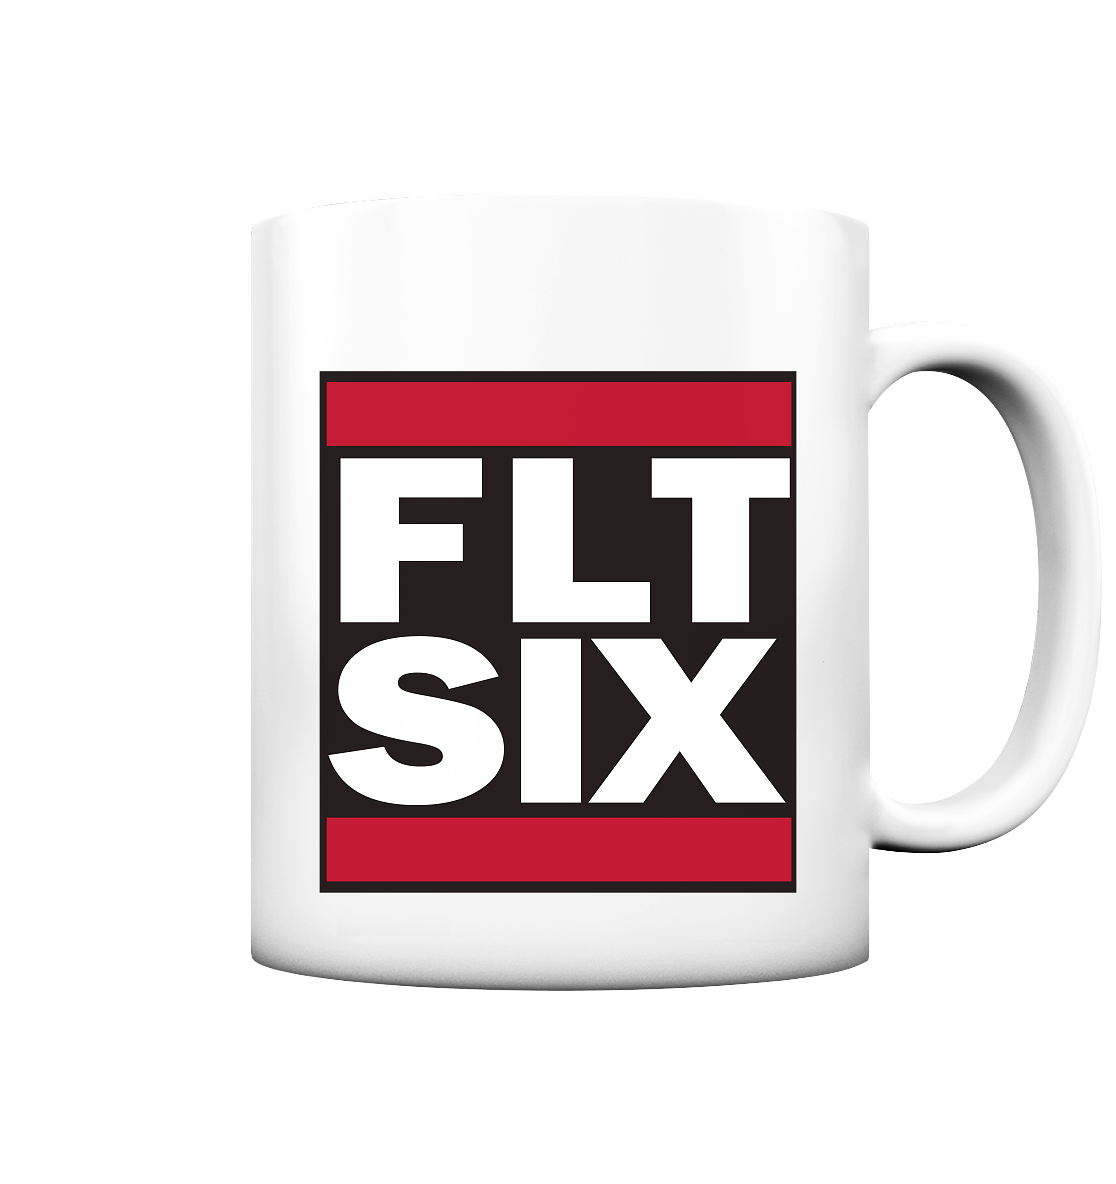 FLT SIX - Matte cup